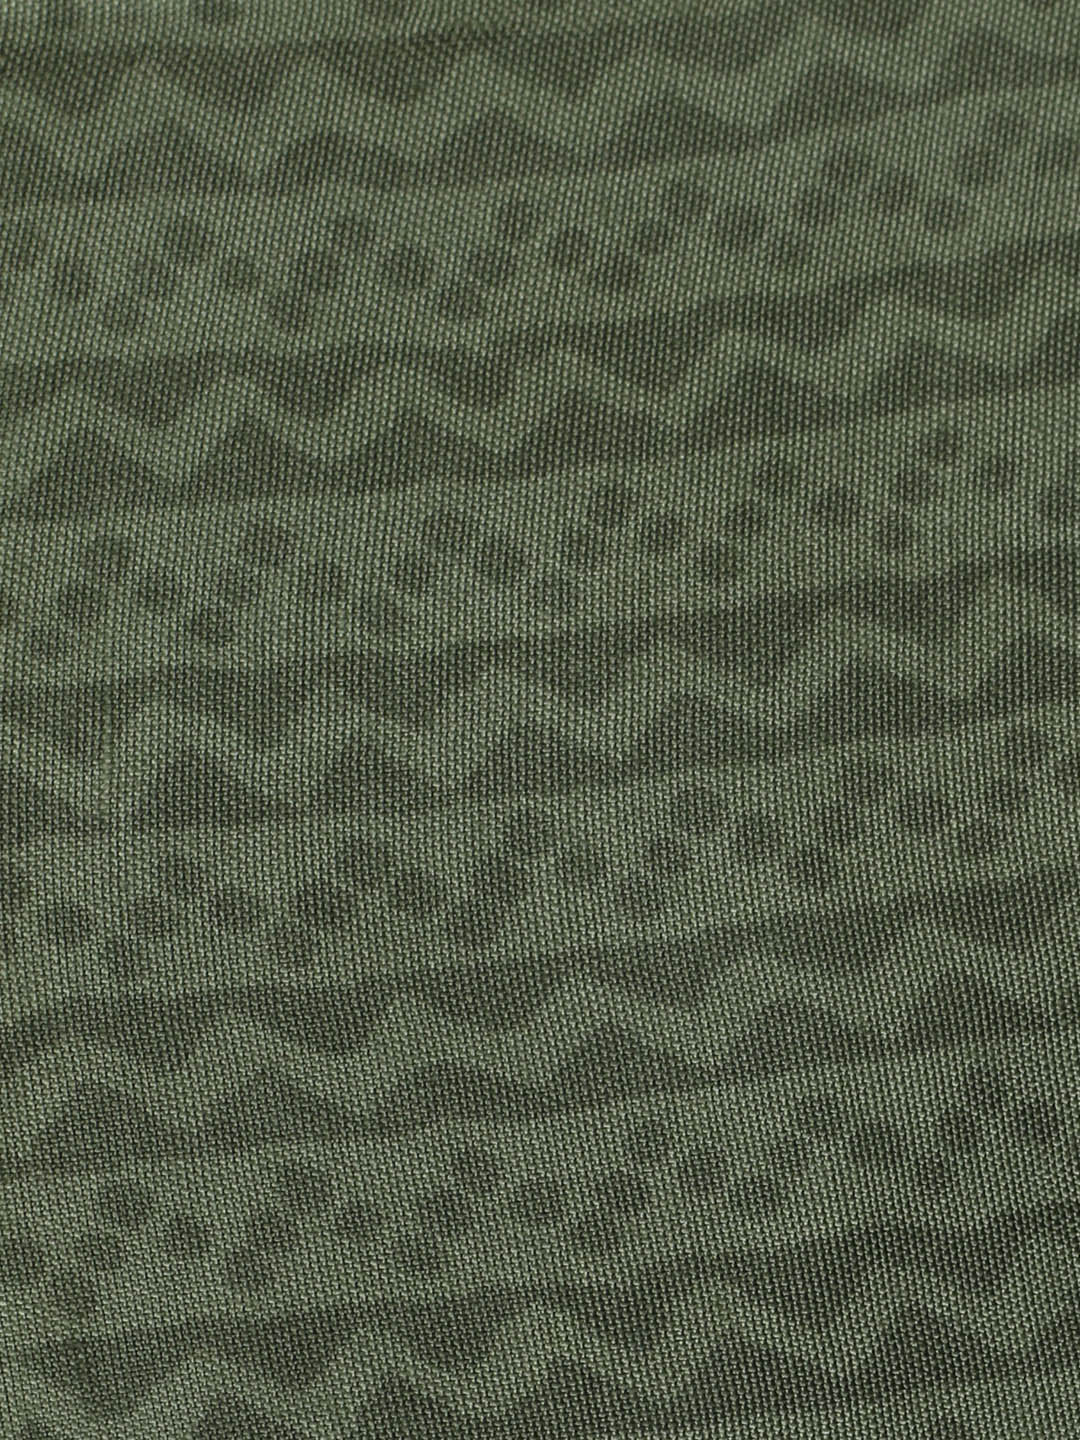 Printed Linen Unstitched Suit Piece With Dupatta